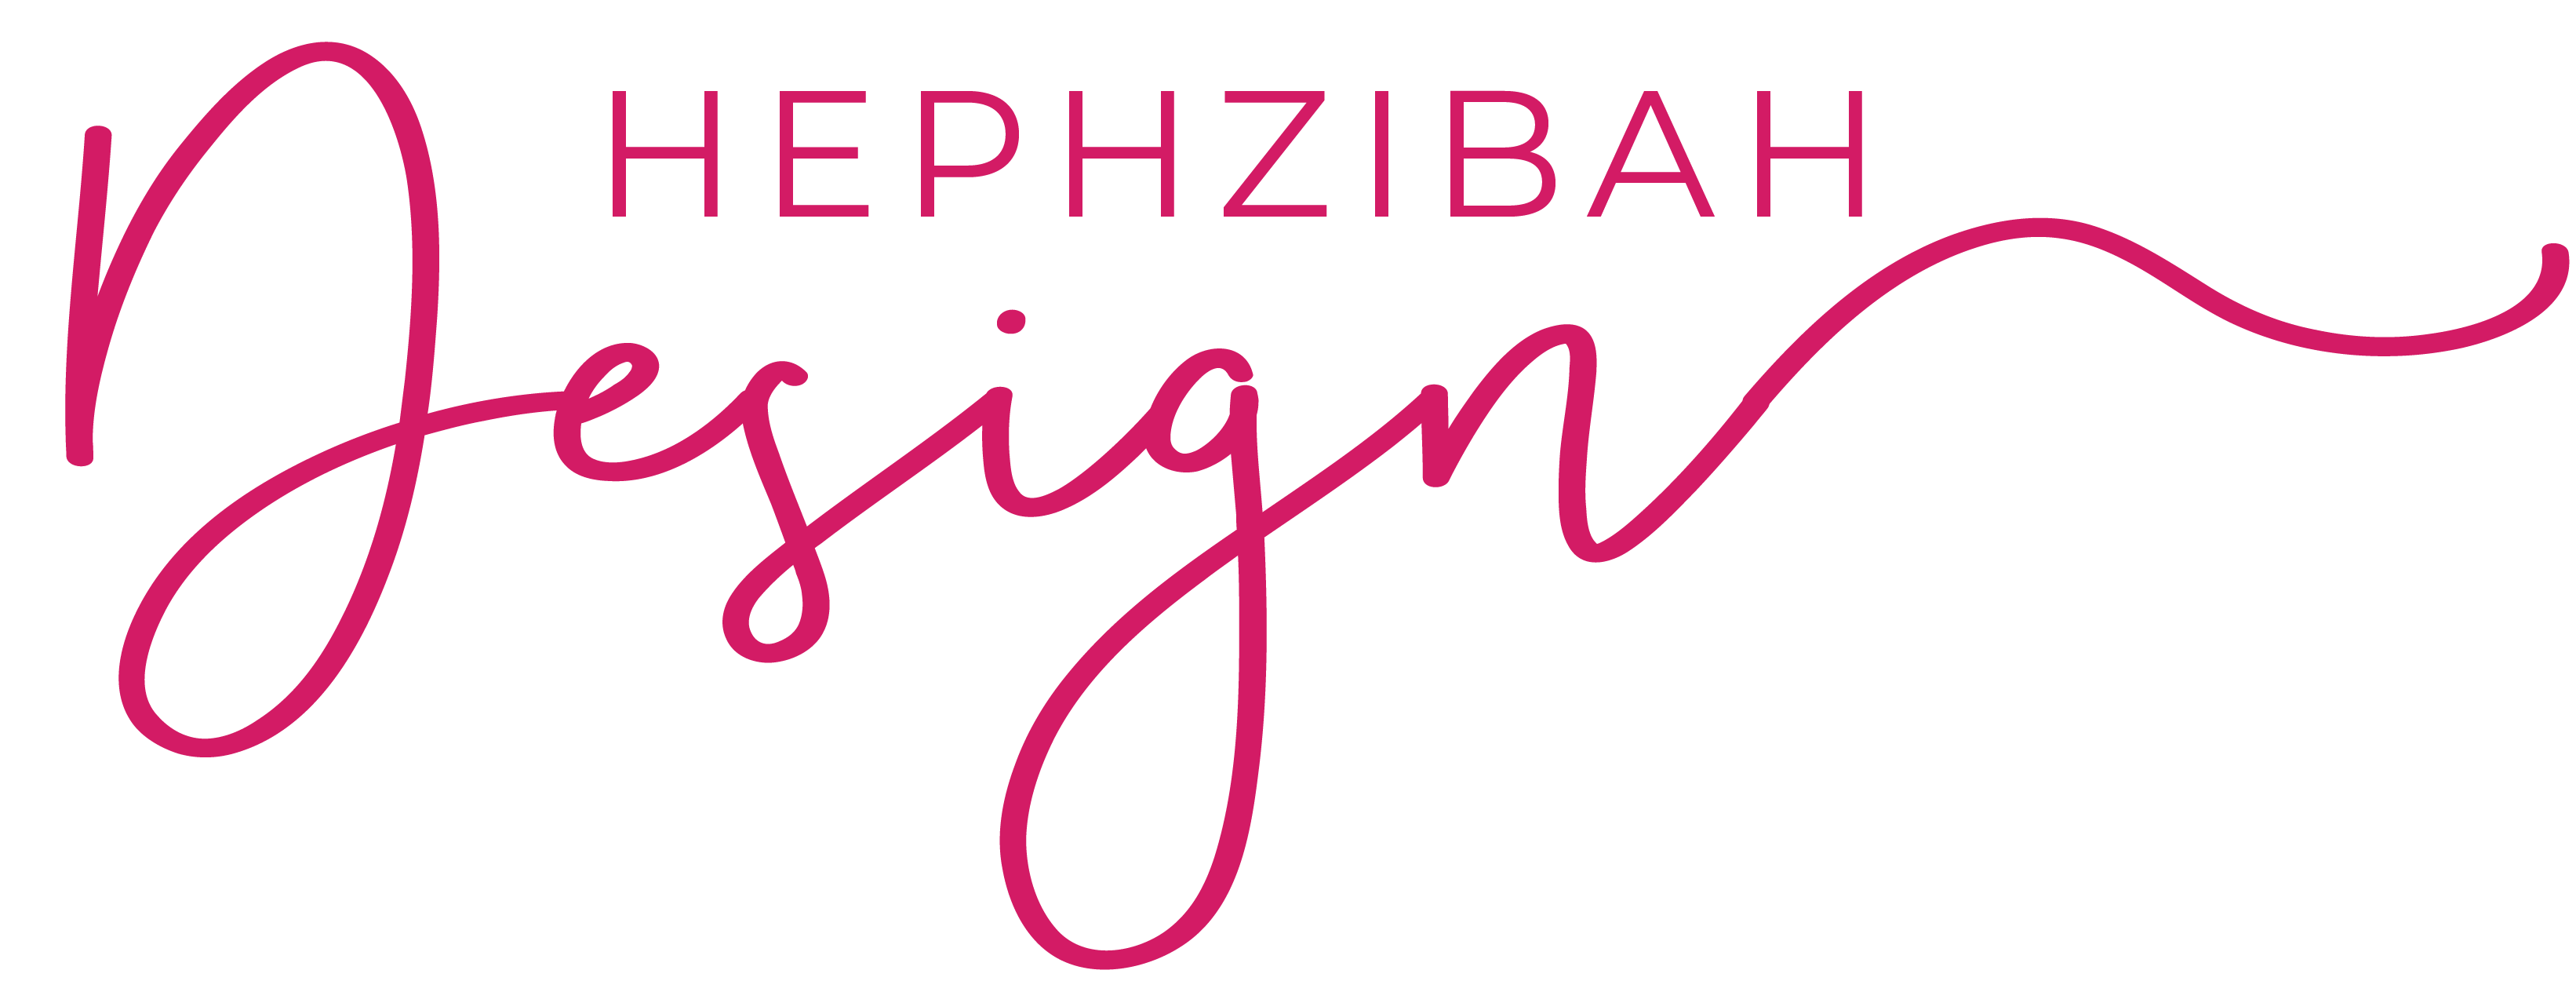 Hephzibah Design - wedding, event, social, business stationery